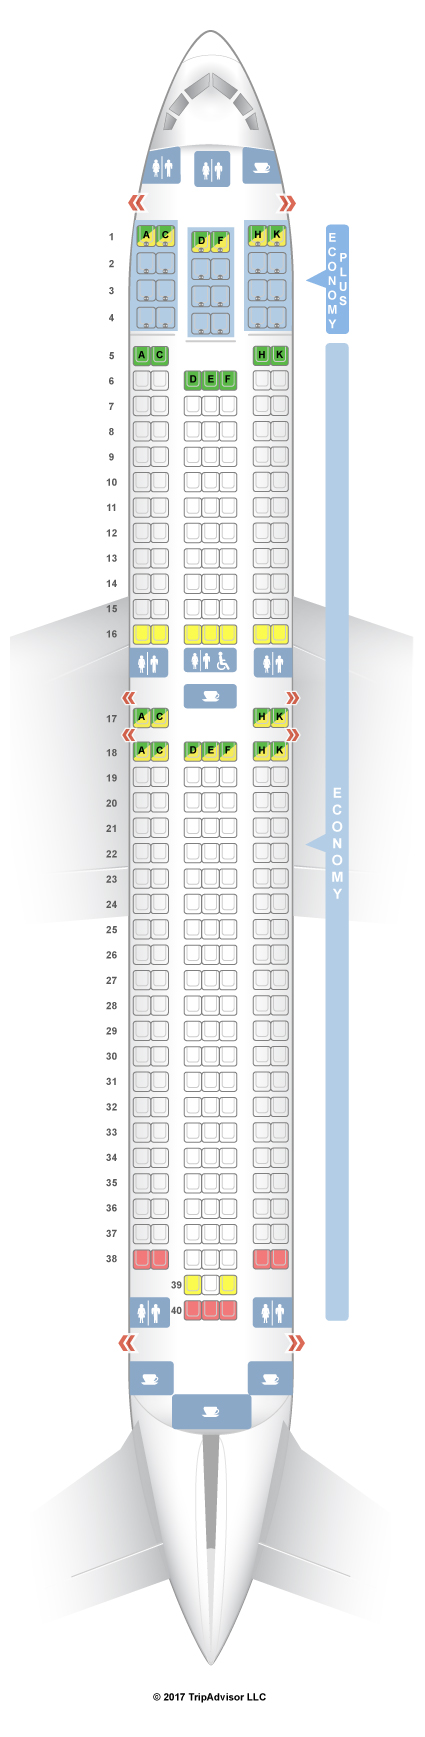 Westjet 737 Seating Chart